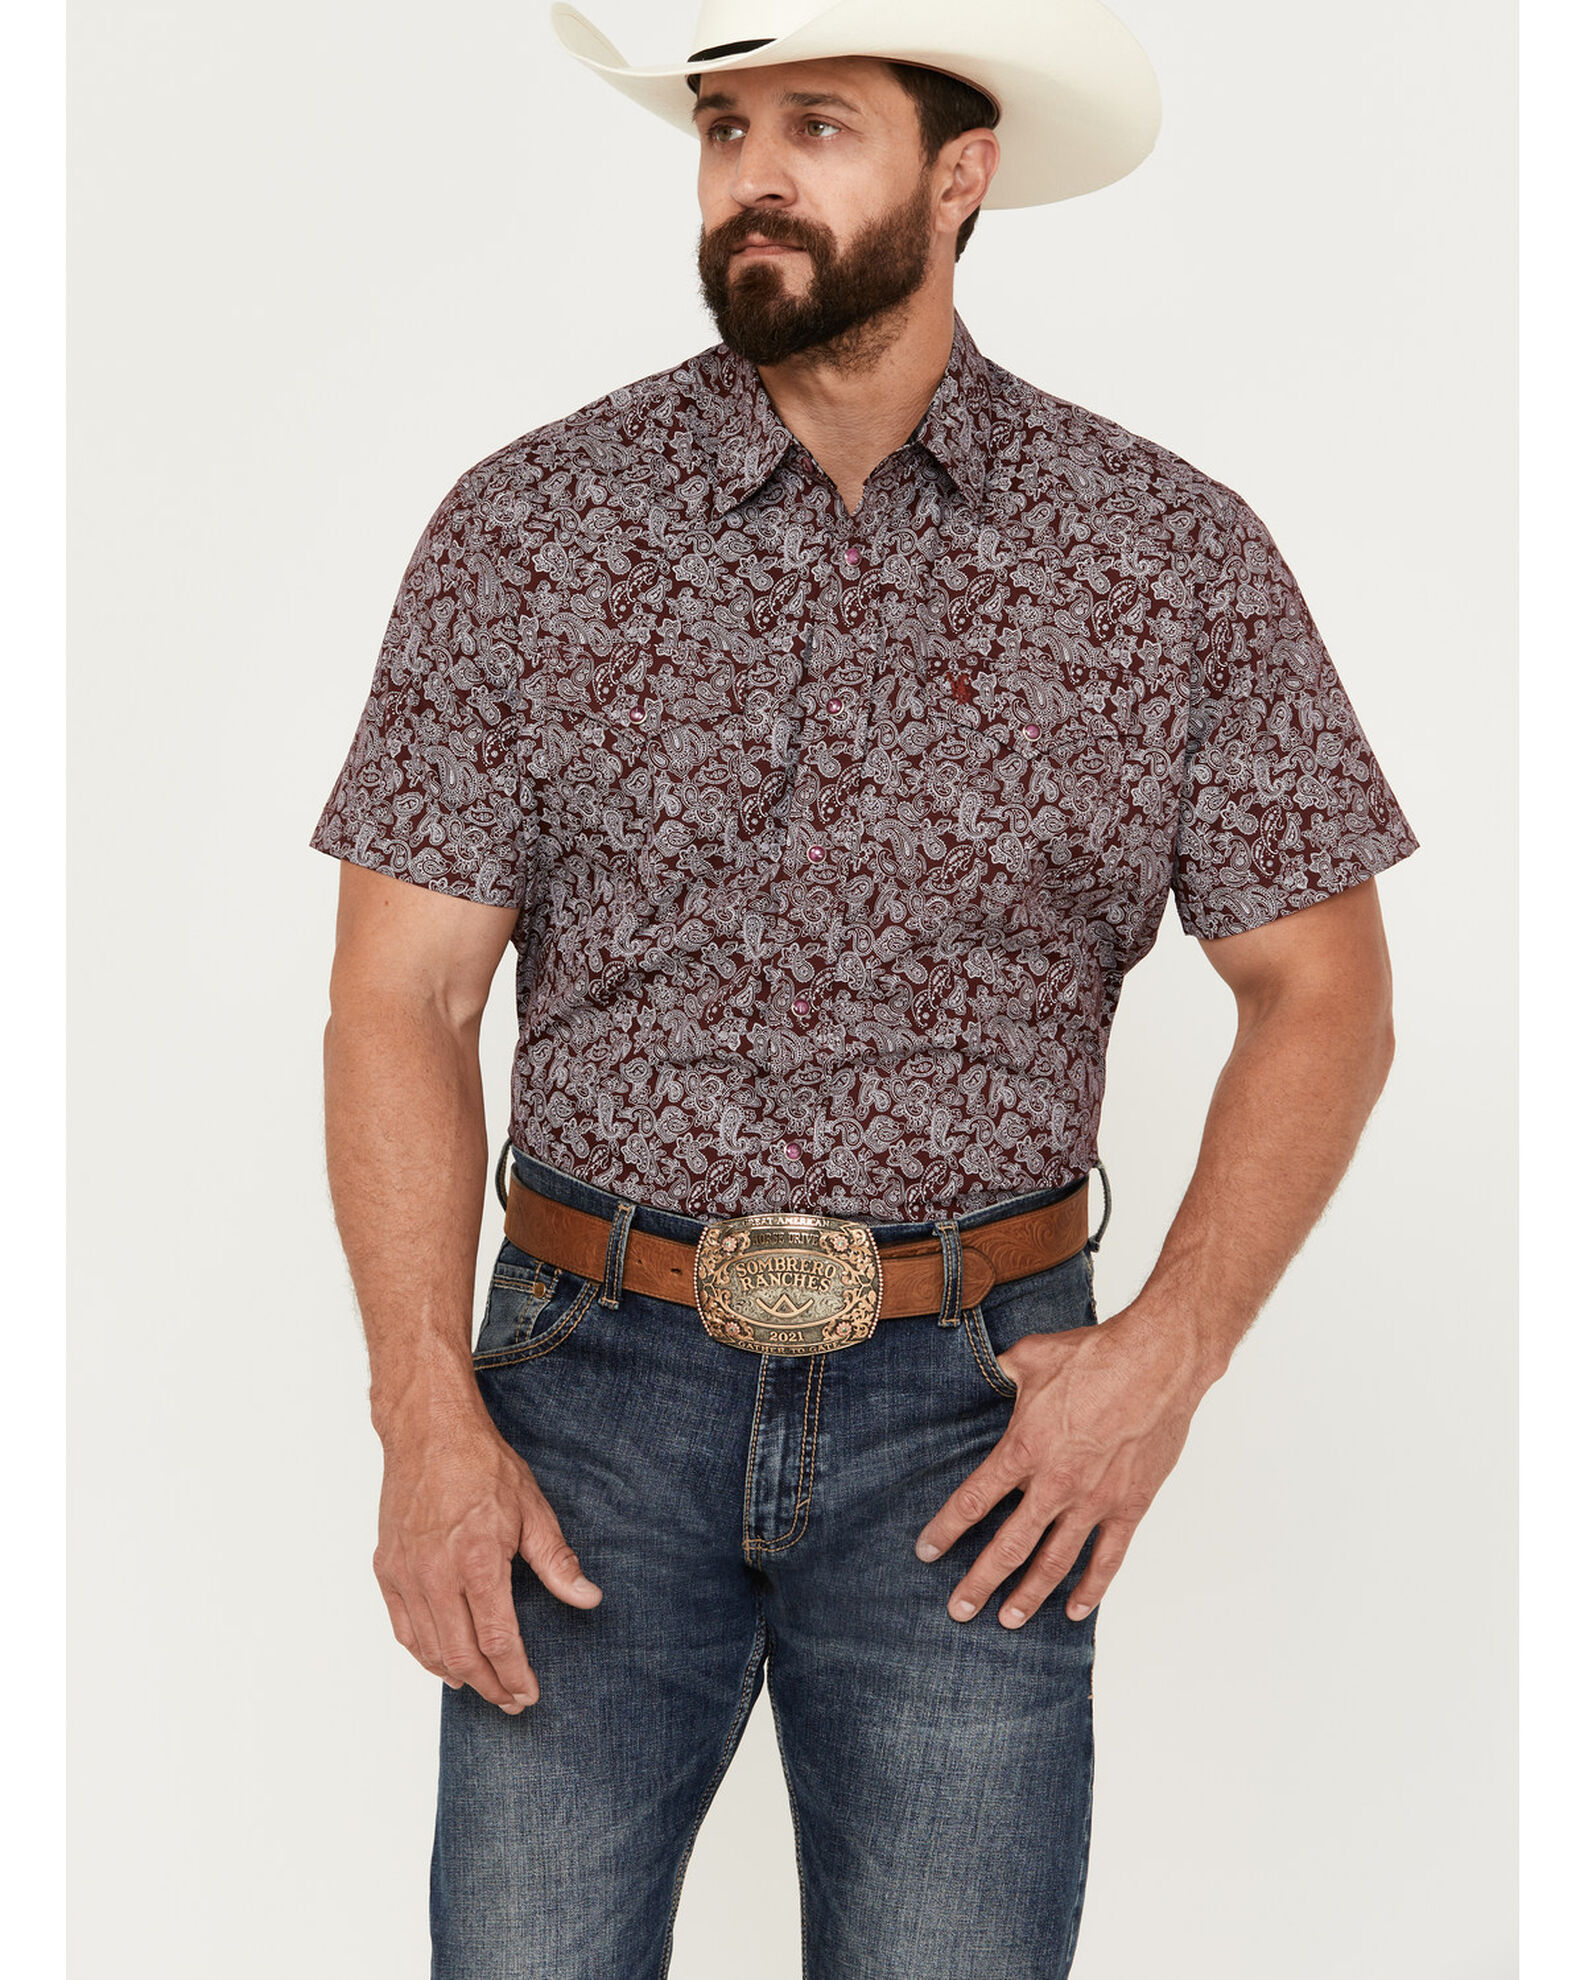 Rodeo Clothing Men's Paisley Print Short Sleeve Snap Western Shirt